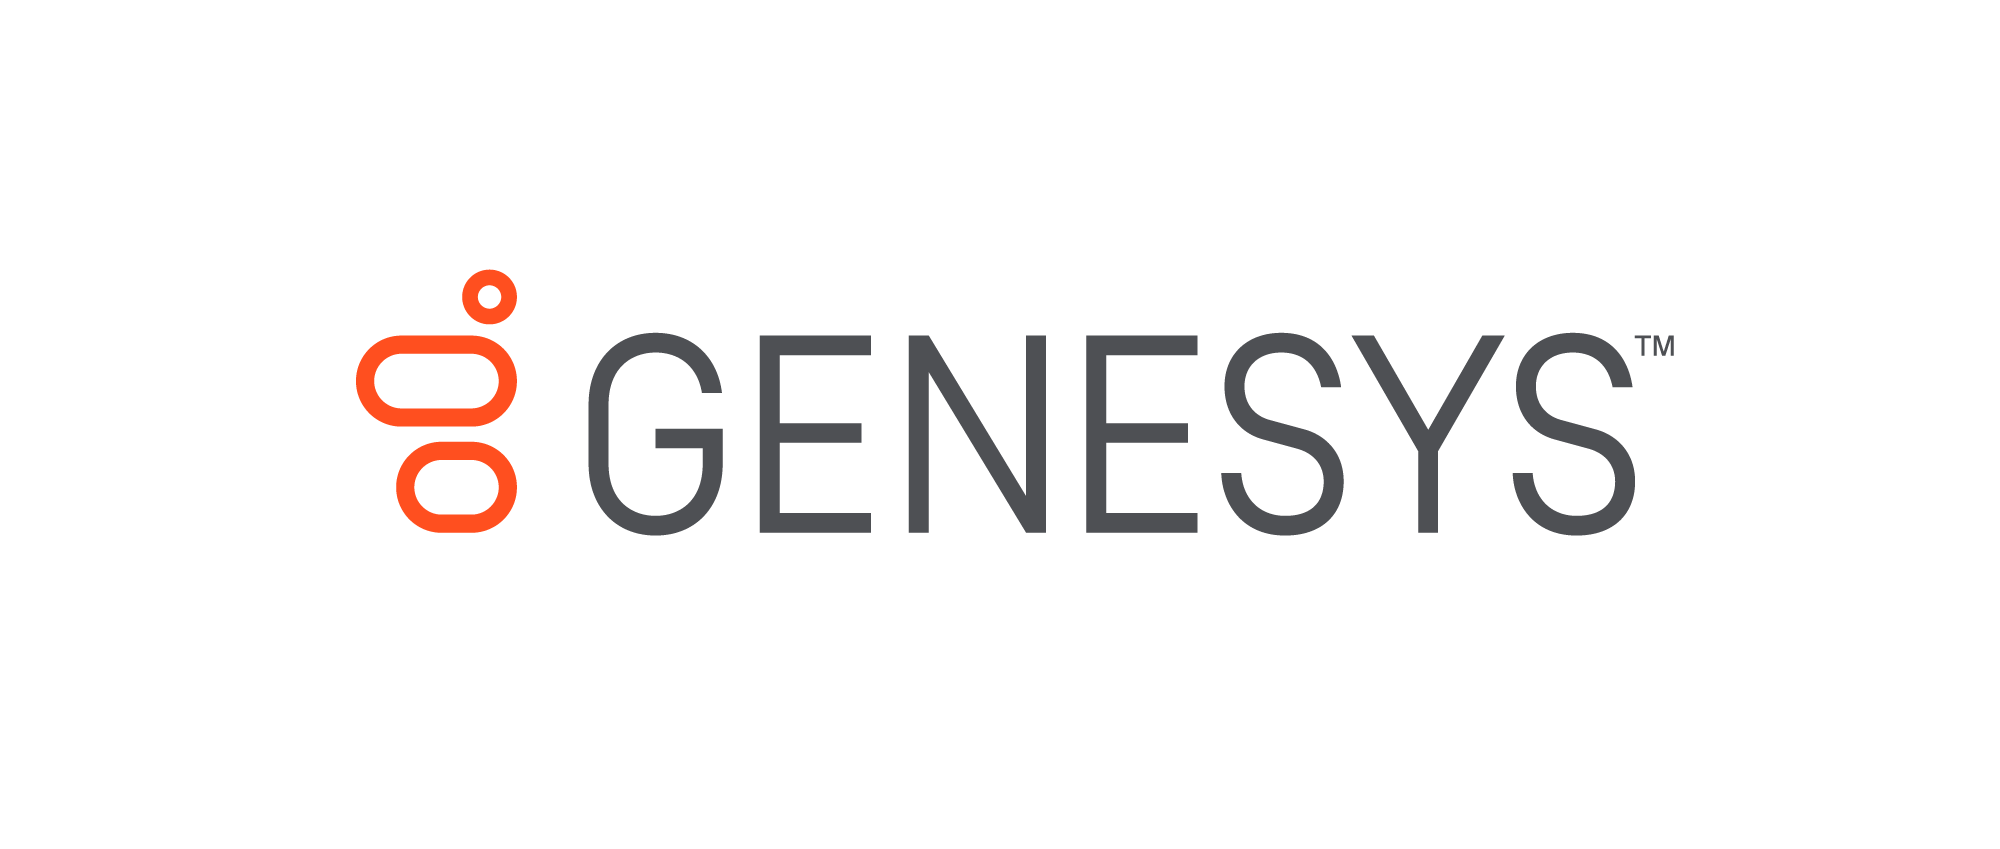 Genesys EMEA Cloud Partner of the Year 2020